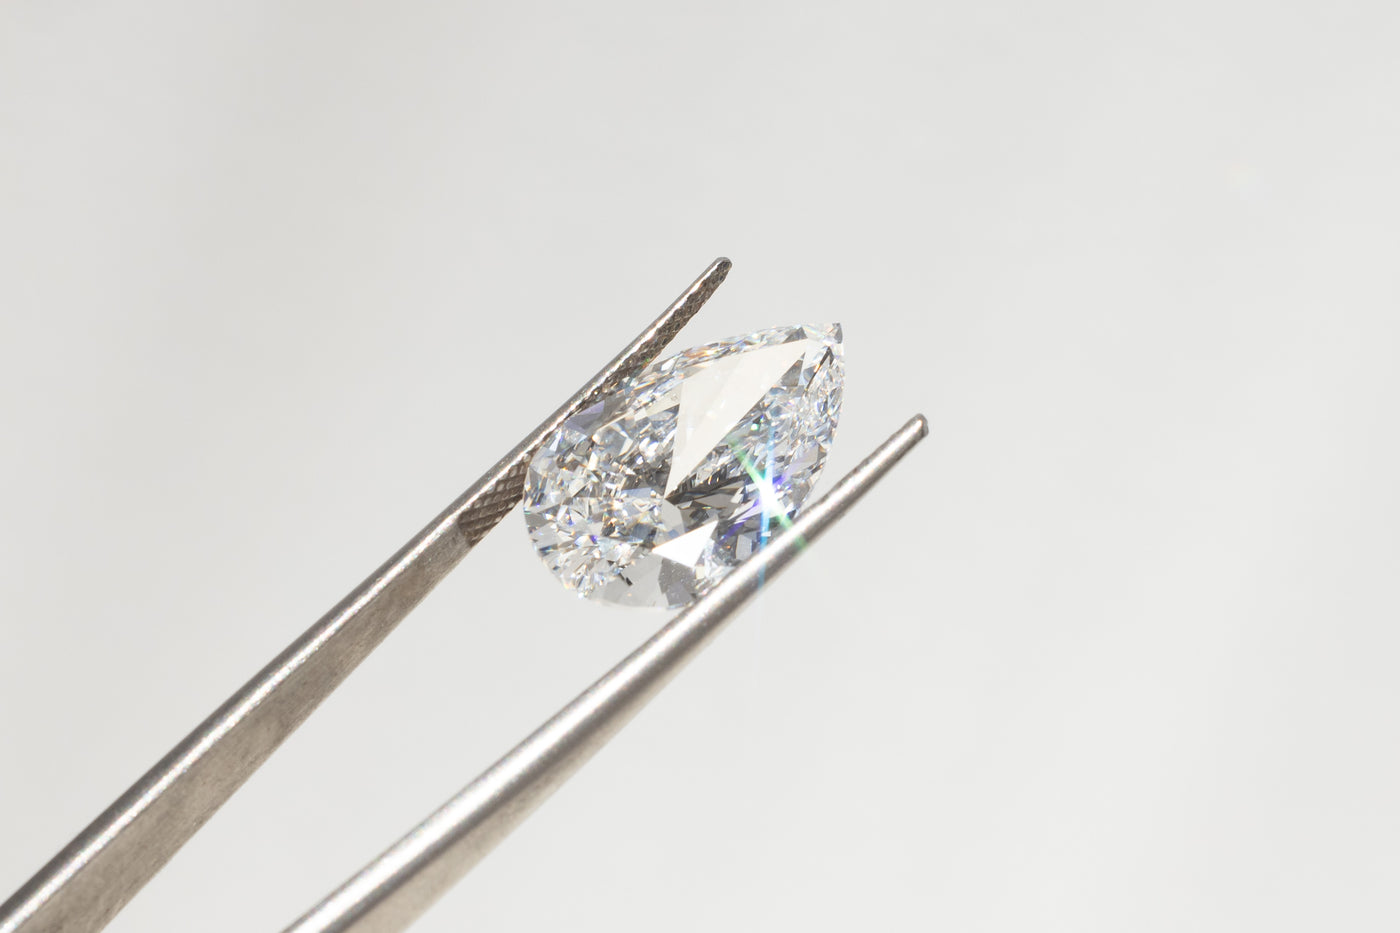 A 4 carat pear shaped diamond, held in a pair of jewellery tweezers.  